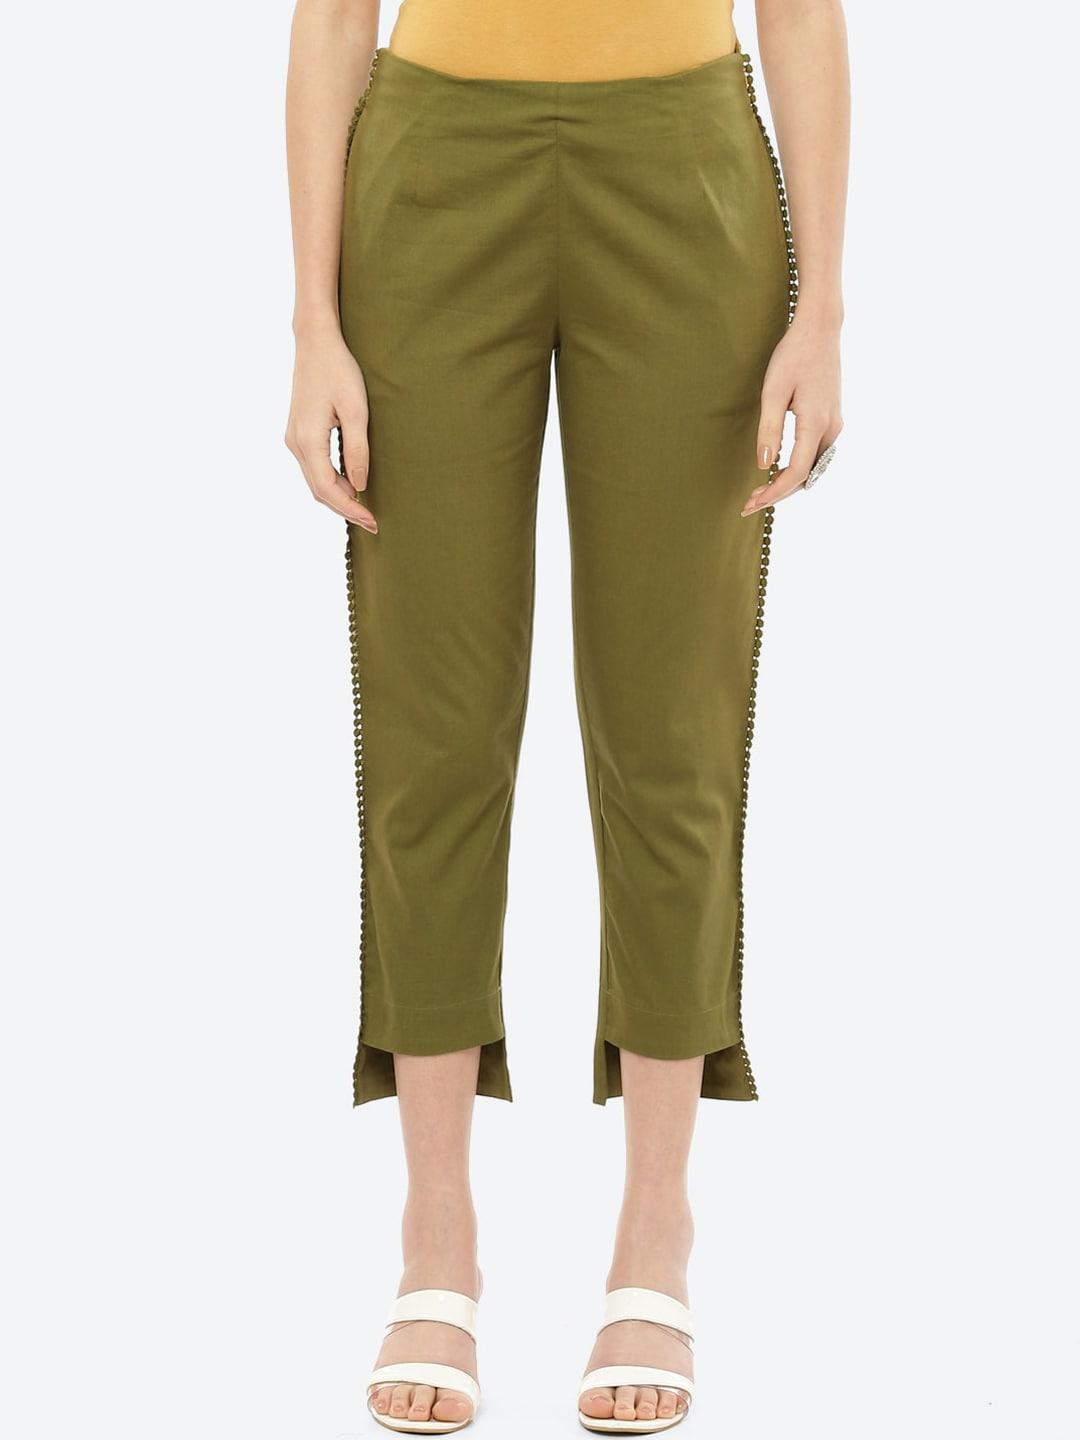 rangriti women olive green solid slim fit trousers